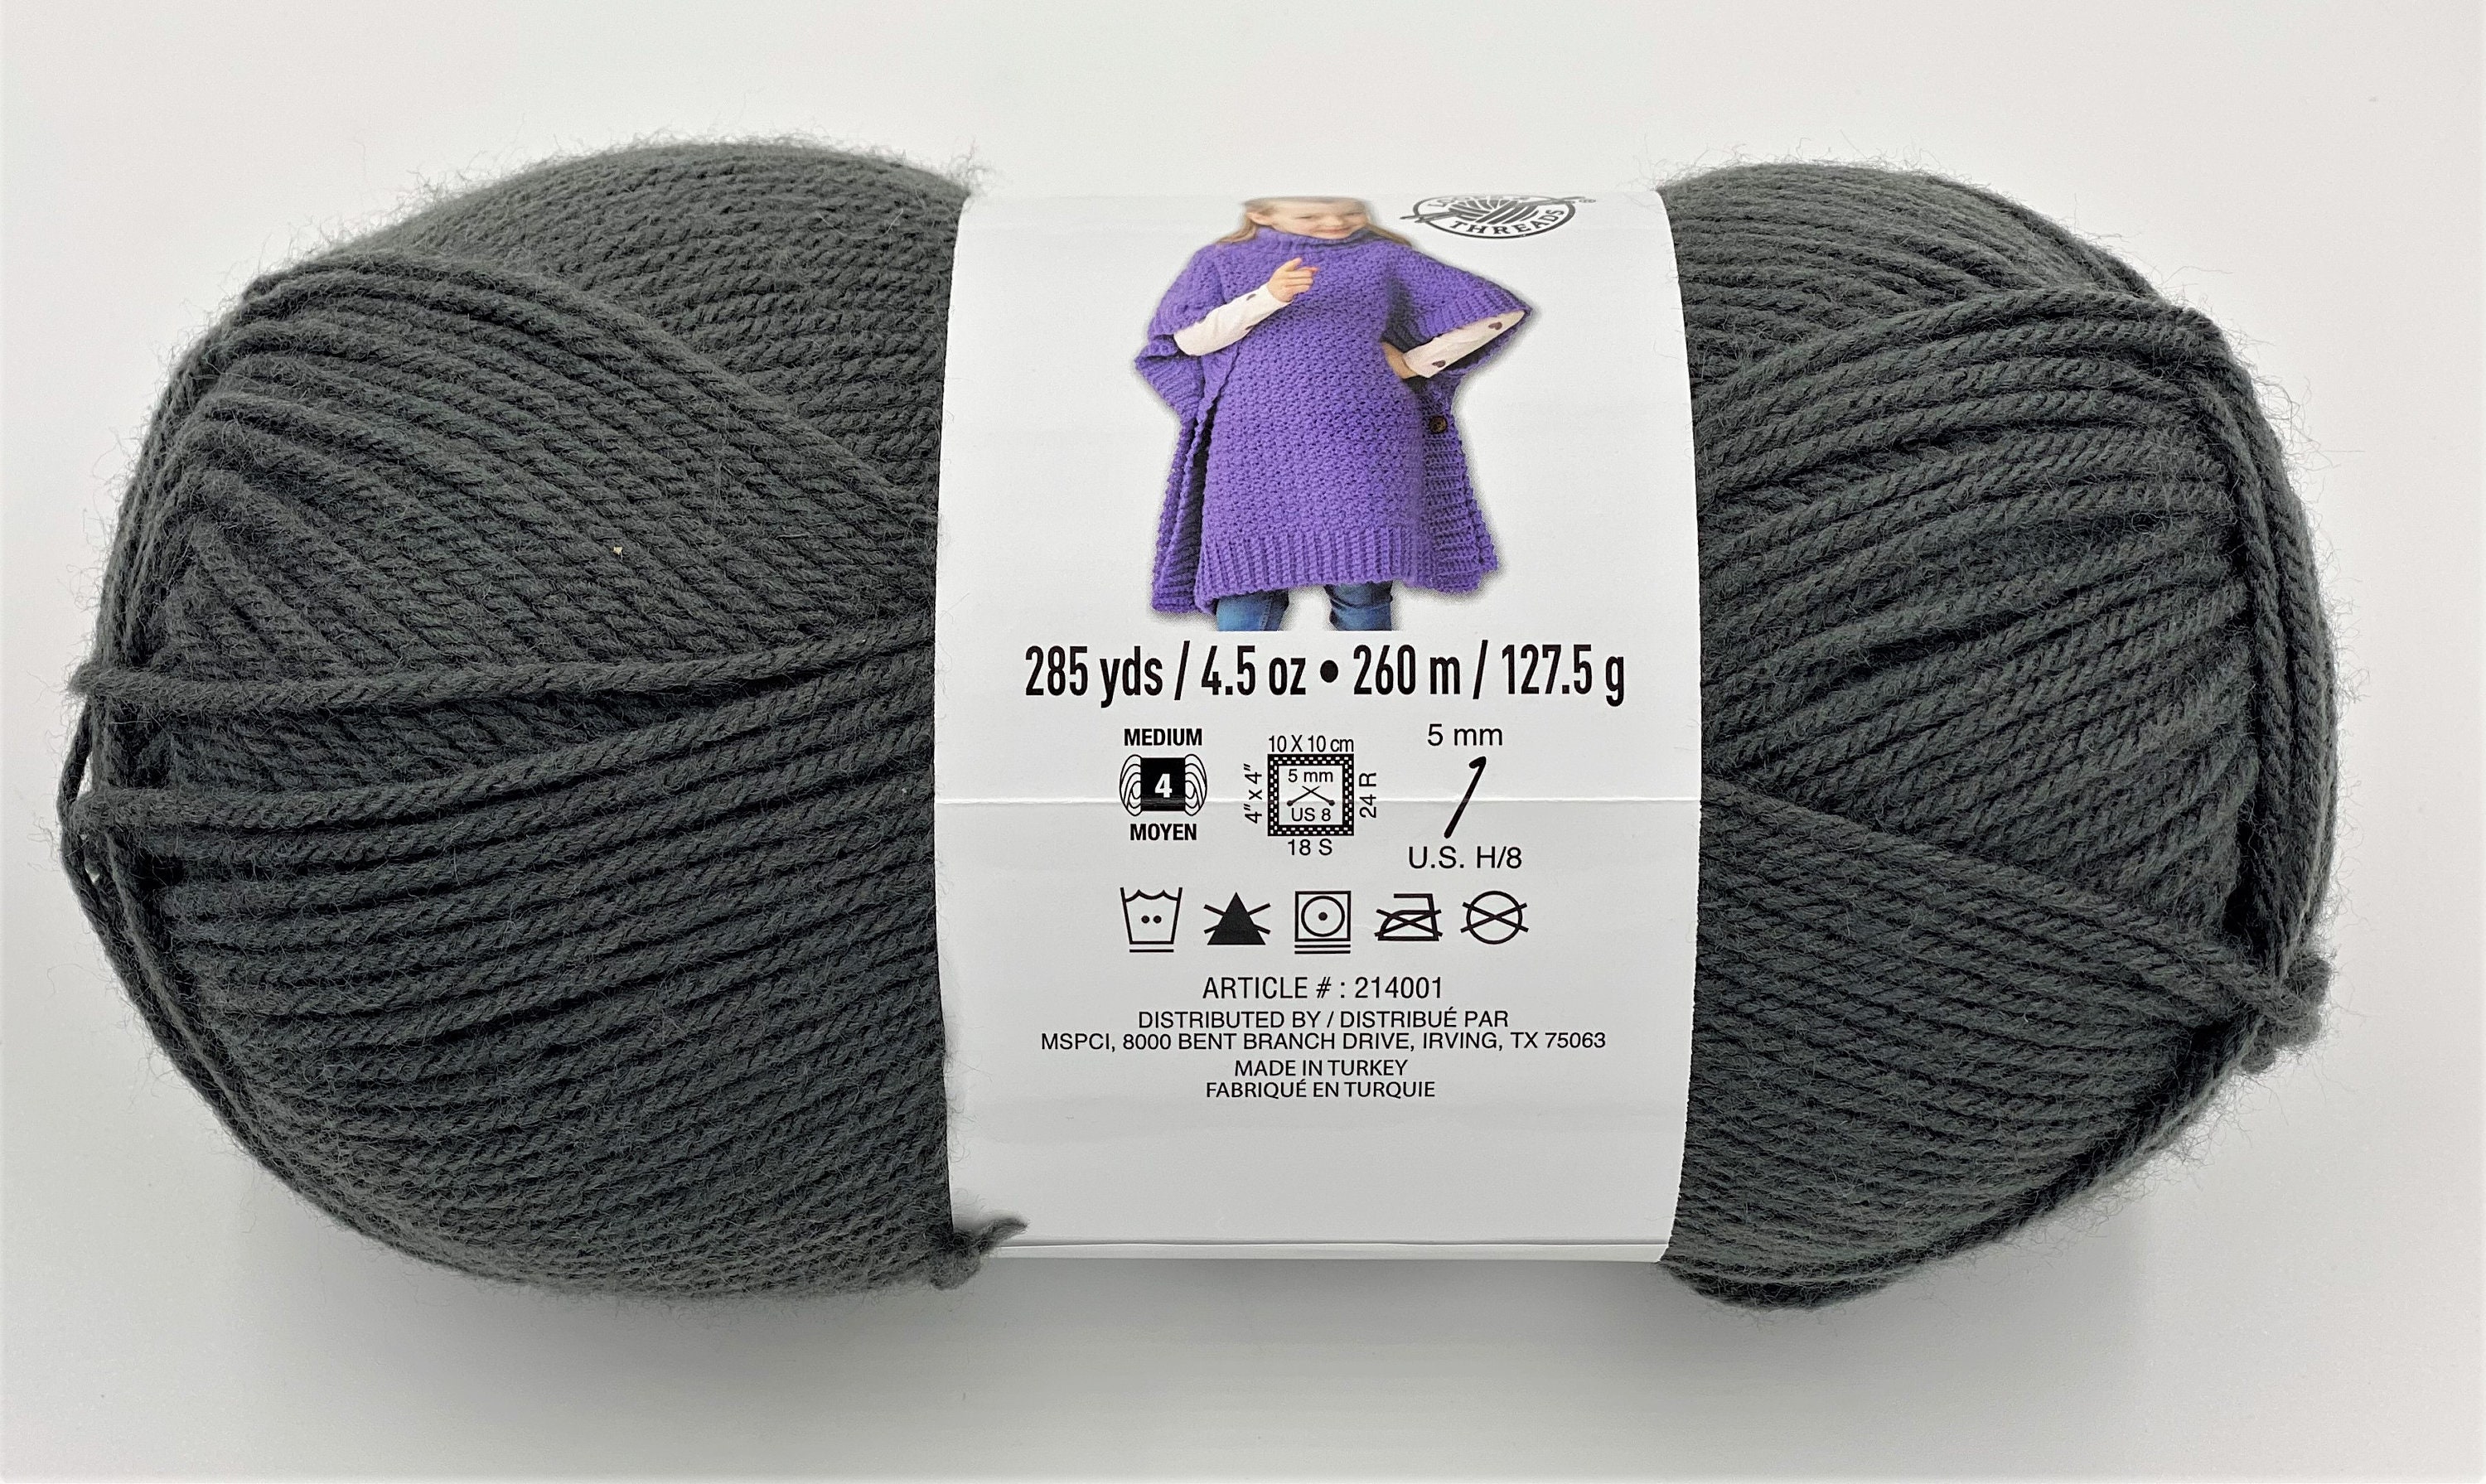 Premium Photo  Tangles of plush yarn basket with knitting threads plush  yarn